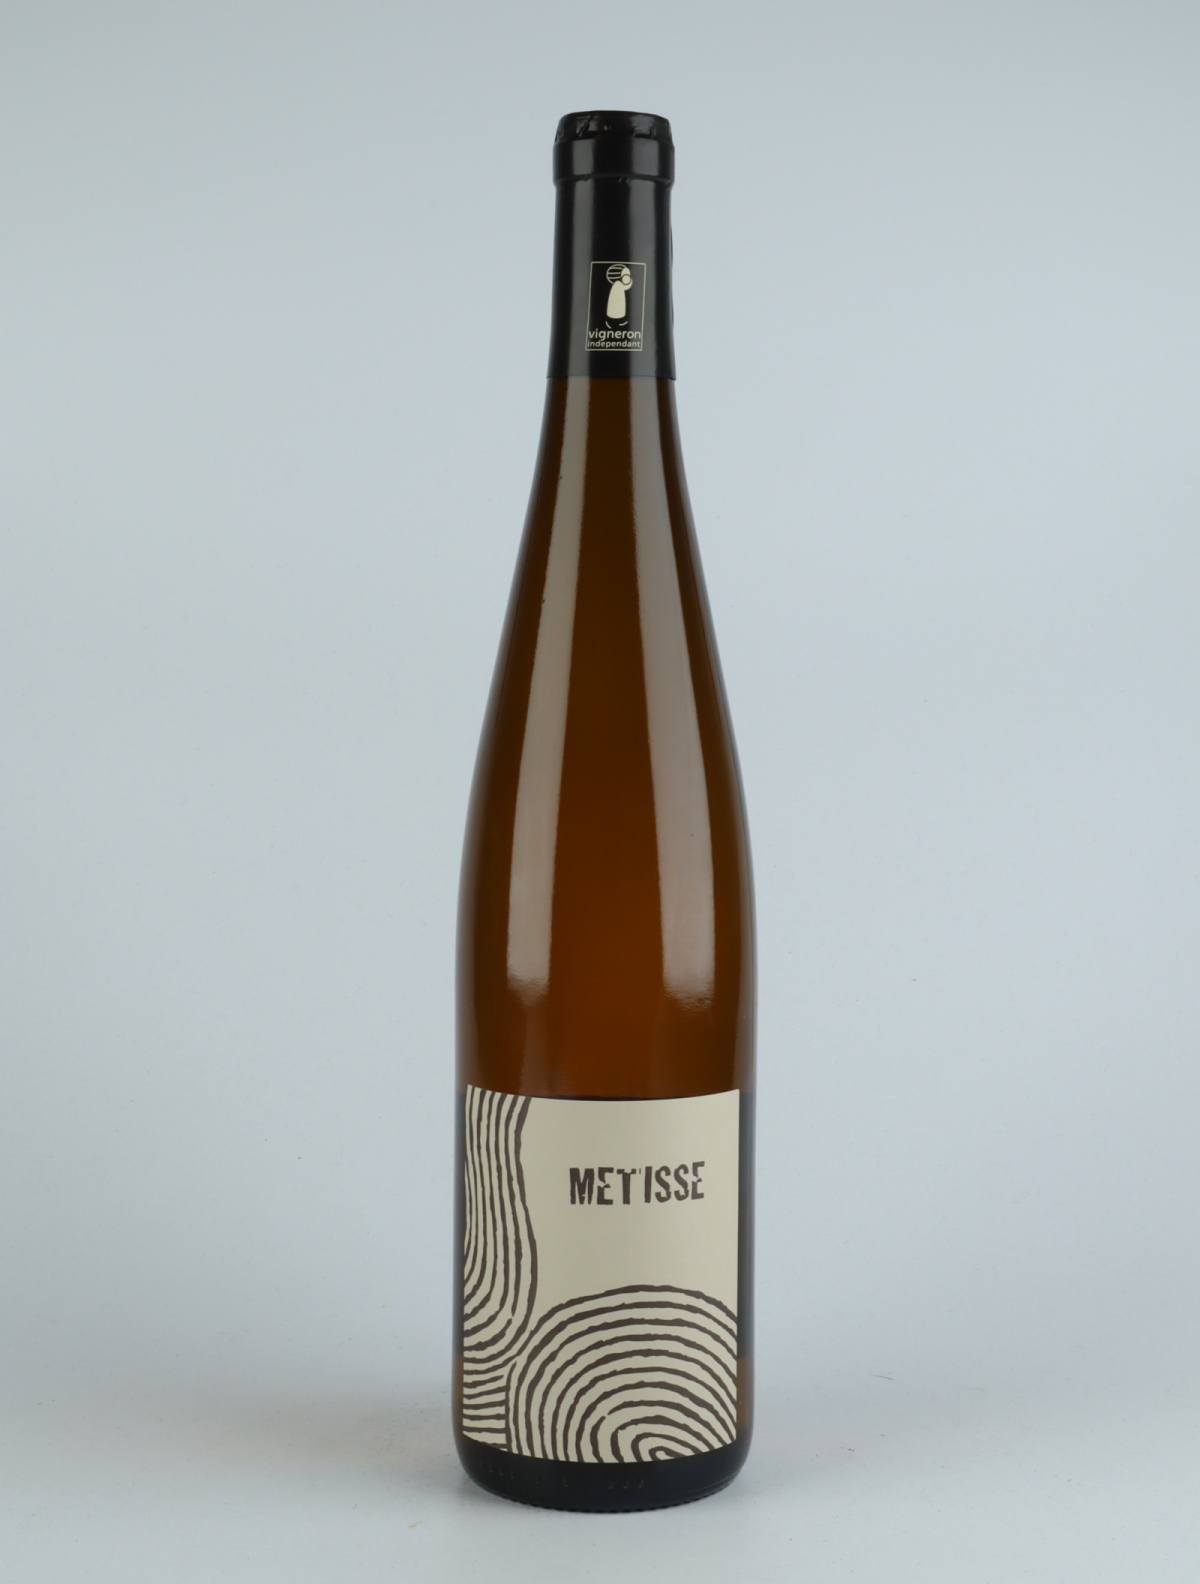 A bottle  Métisse Orange wine from Ruhlmann Dirringer, Alsace in France